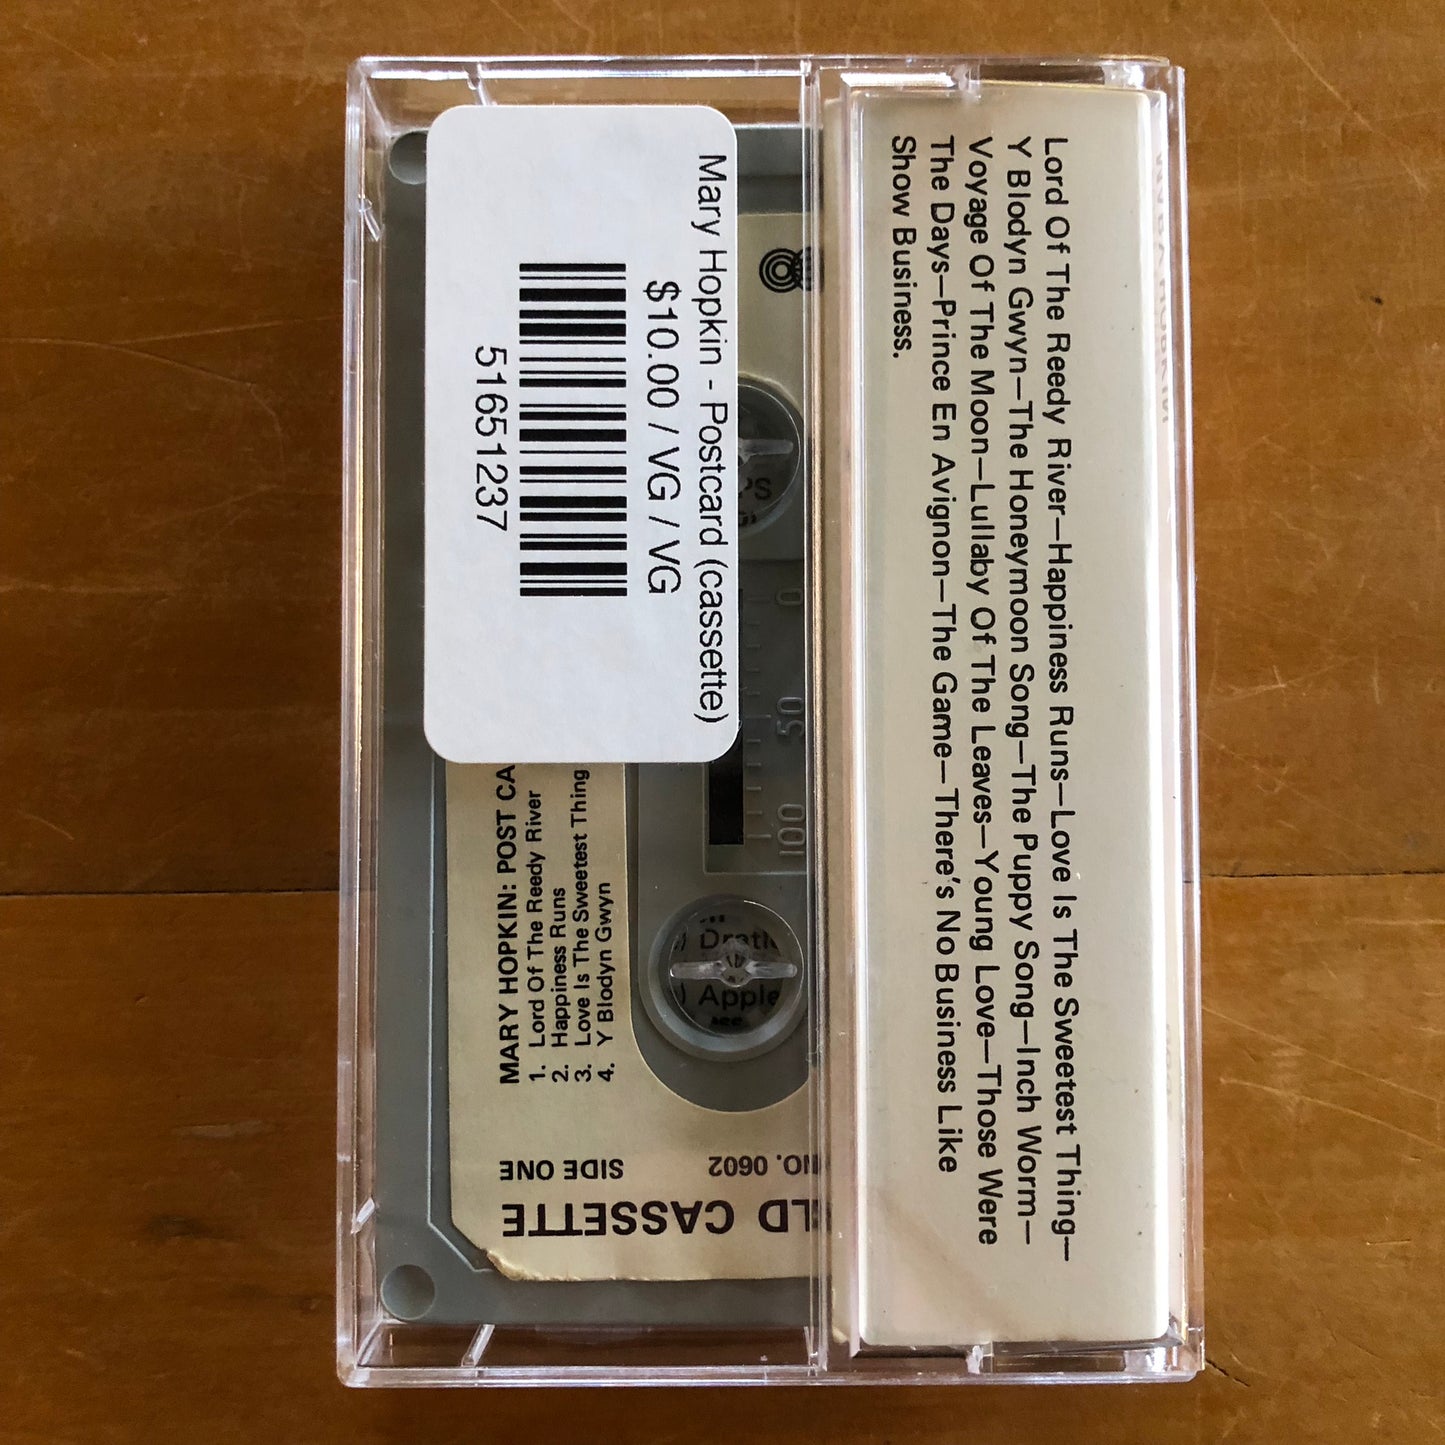 Mary Hopkin - Postcard (cassette)